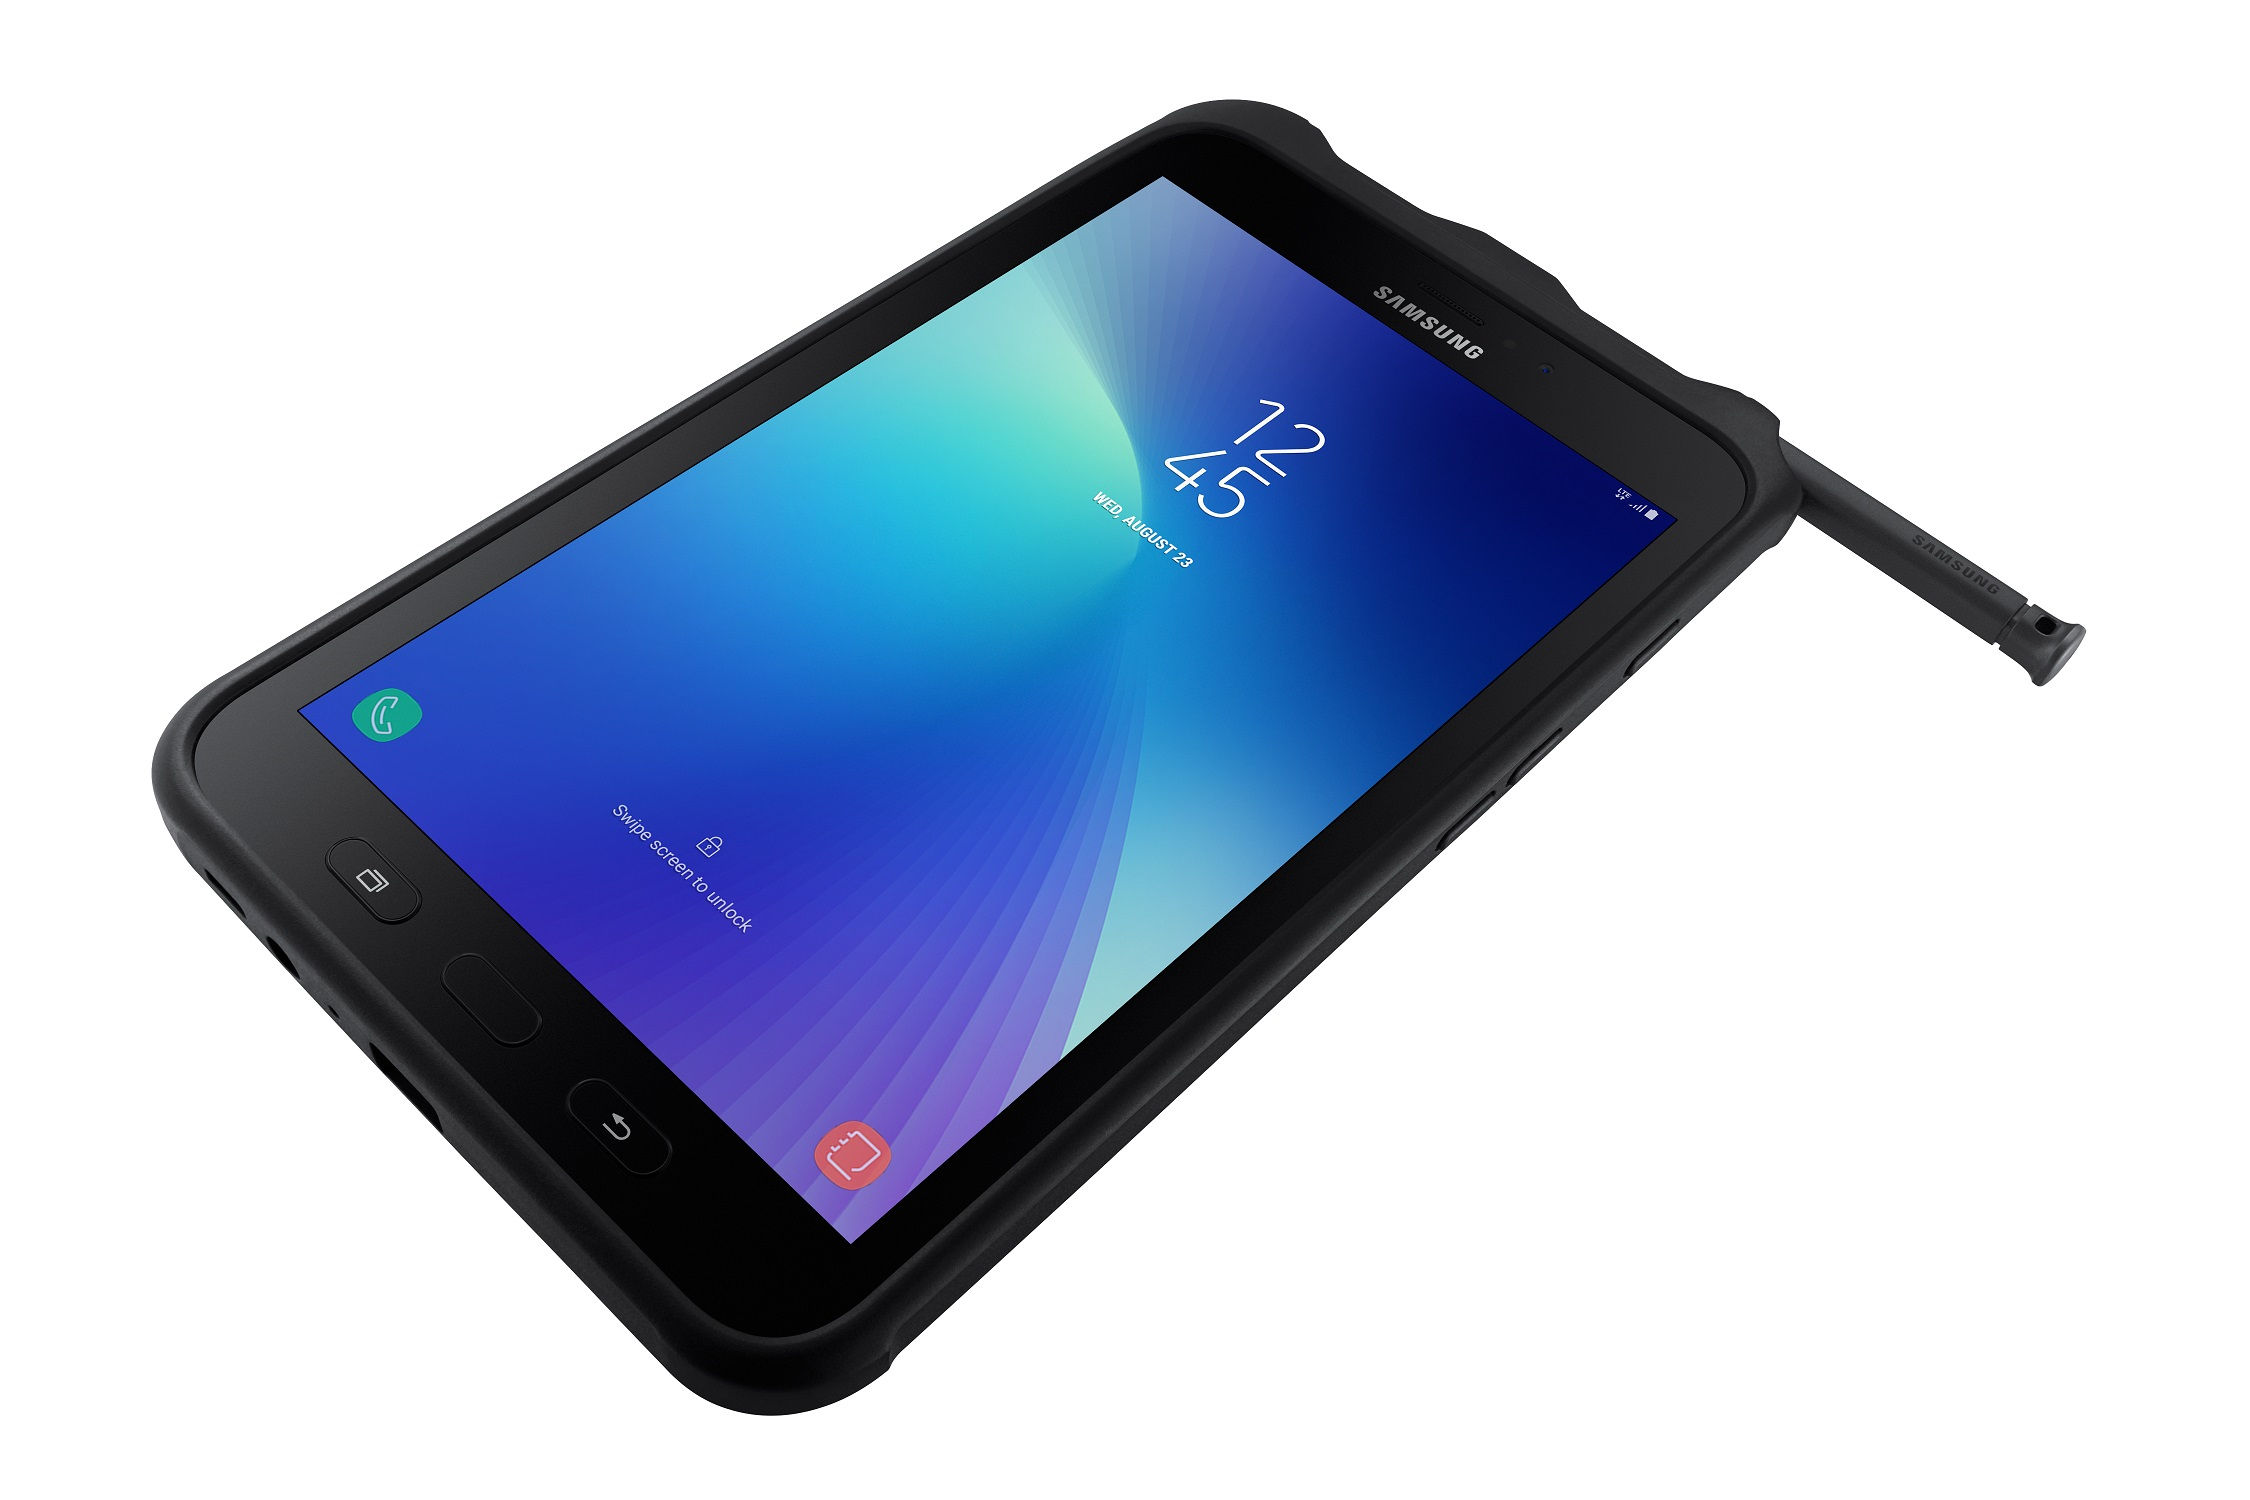 Strapa tabletet mutatott be a Samsung